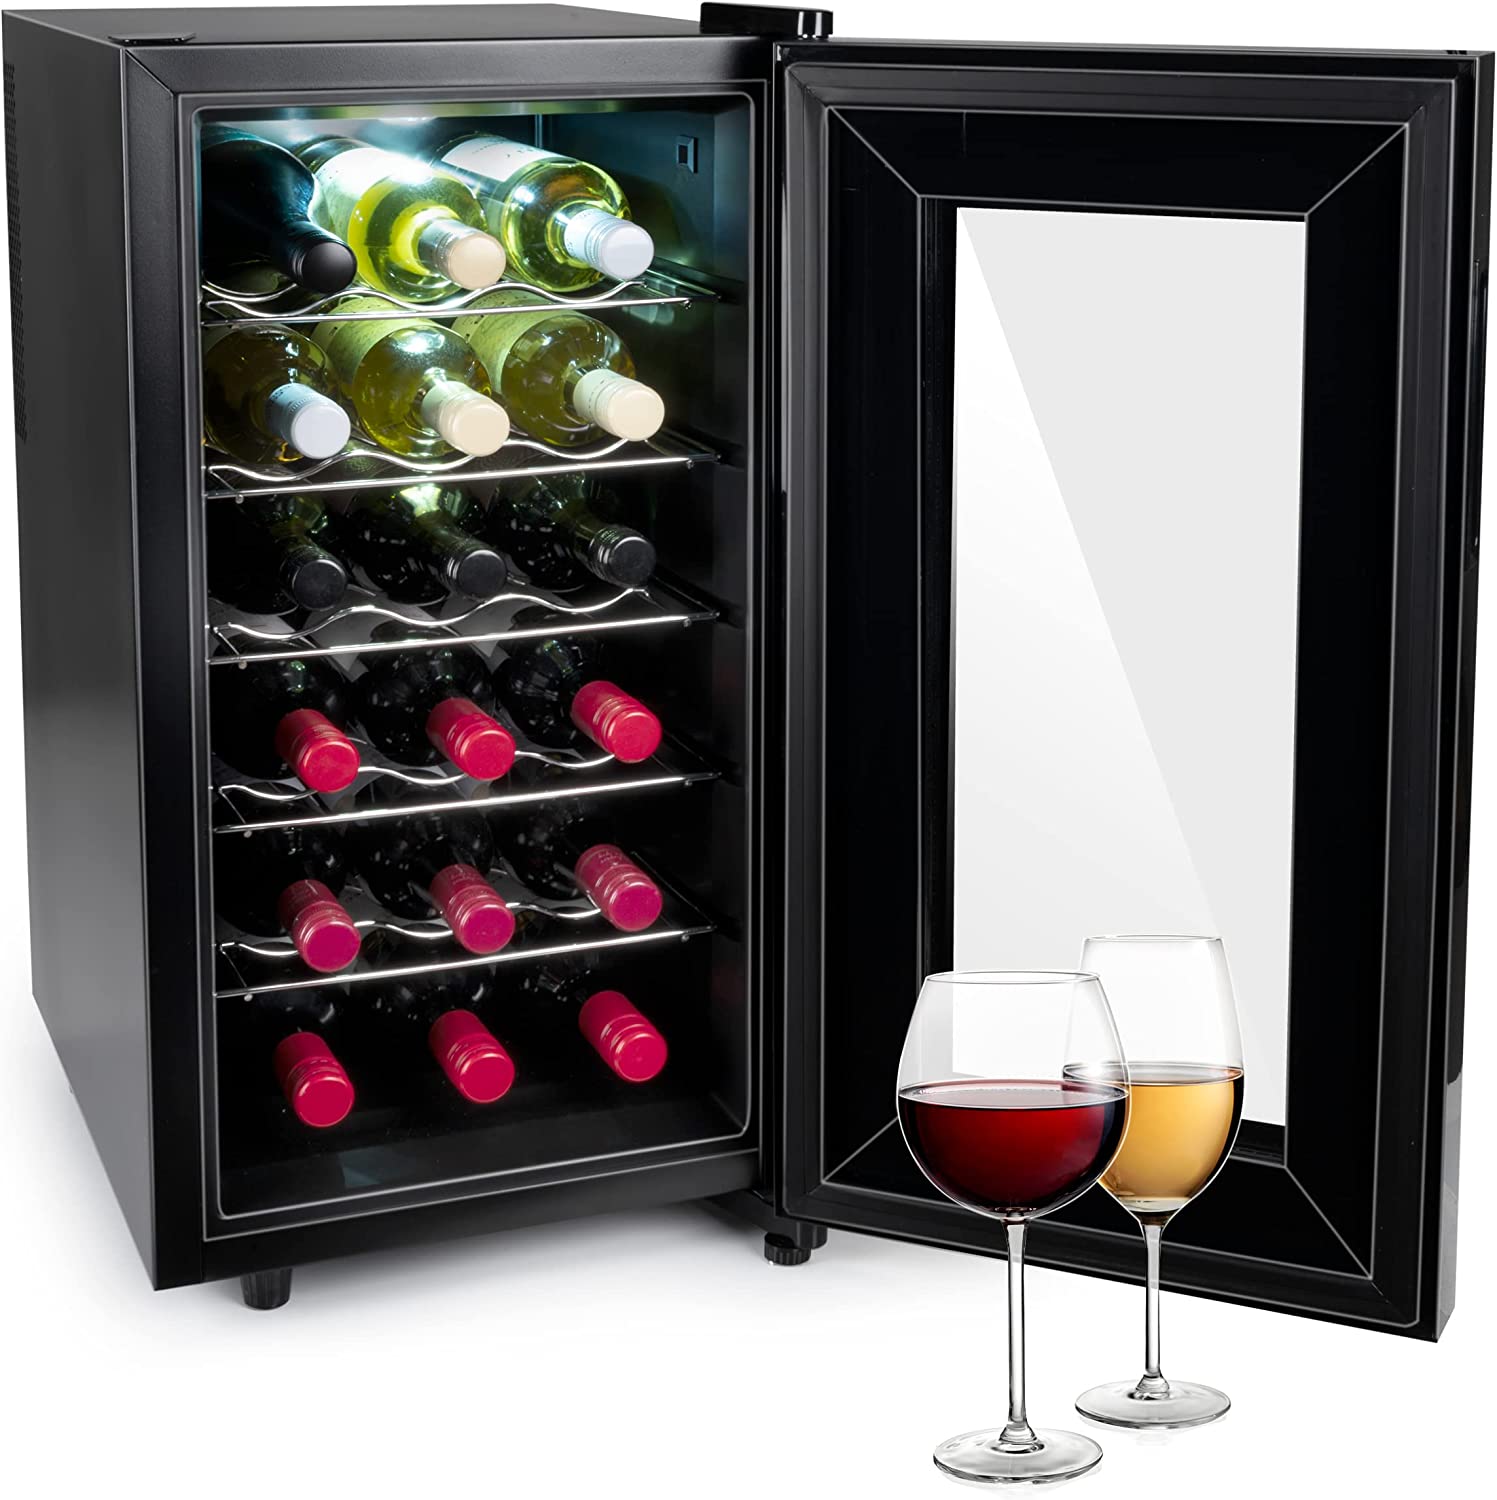 Alpina Wine fridge - 230 V - 18 bottles / 50 L - temperature adjustable from 11 °C to 22 °C - glass door and interior lighting - quiet to silent - black